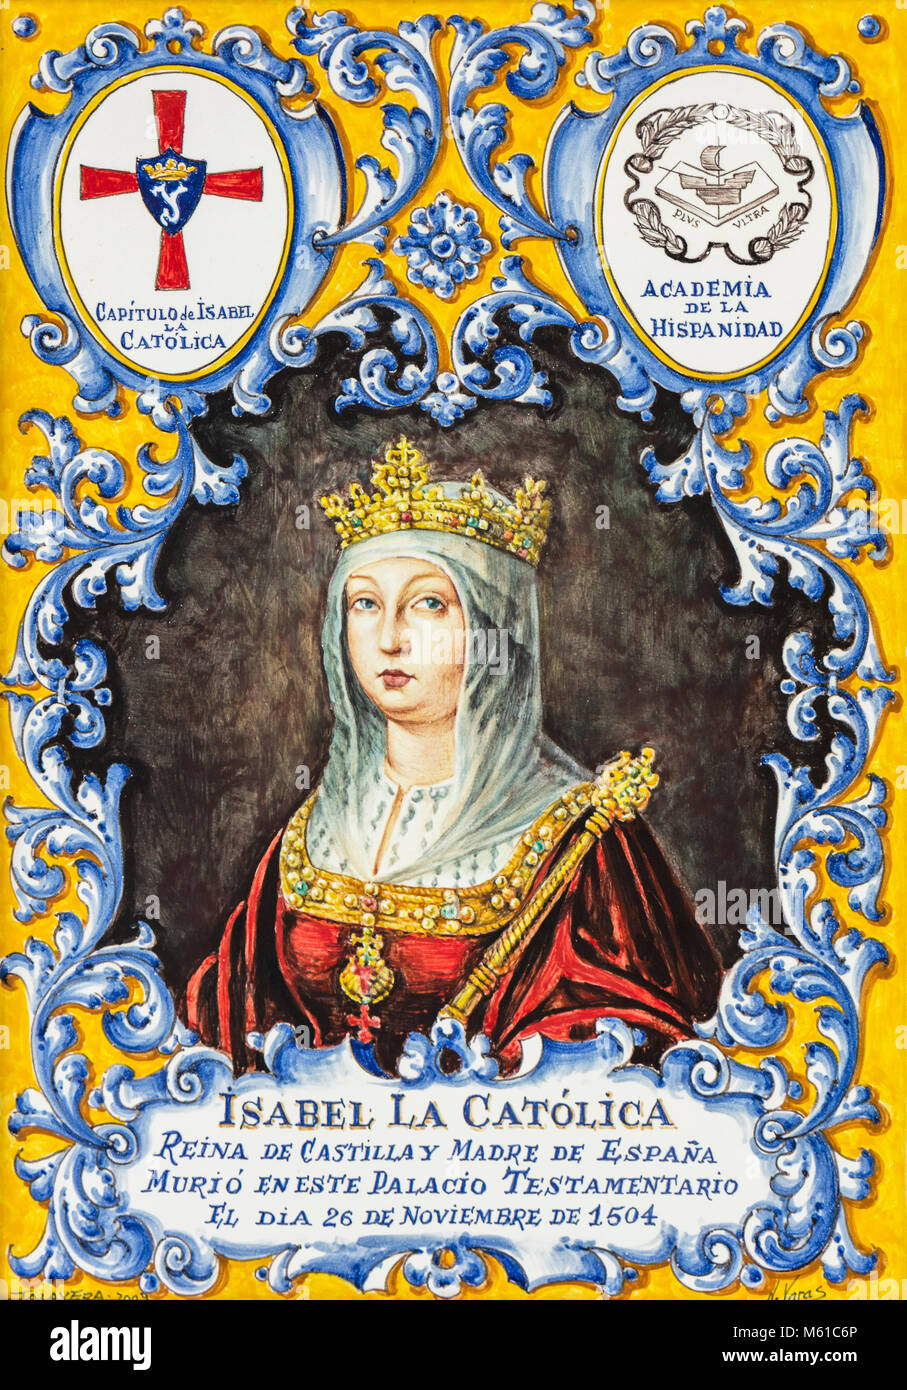 Painted ceramic tile representing Queen Isabella I of Castile at the Palacio Real Testamentario in Medina del Campo, Valladolid Province, Castile and  Stock Photo